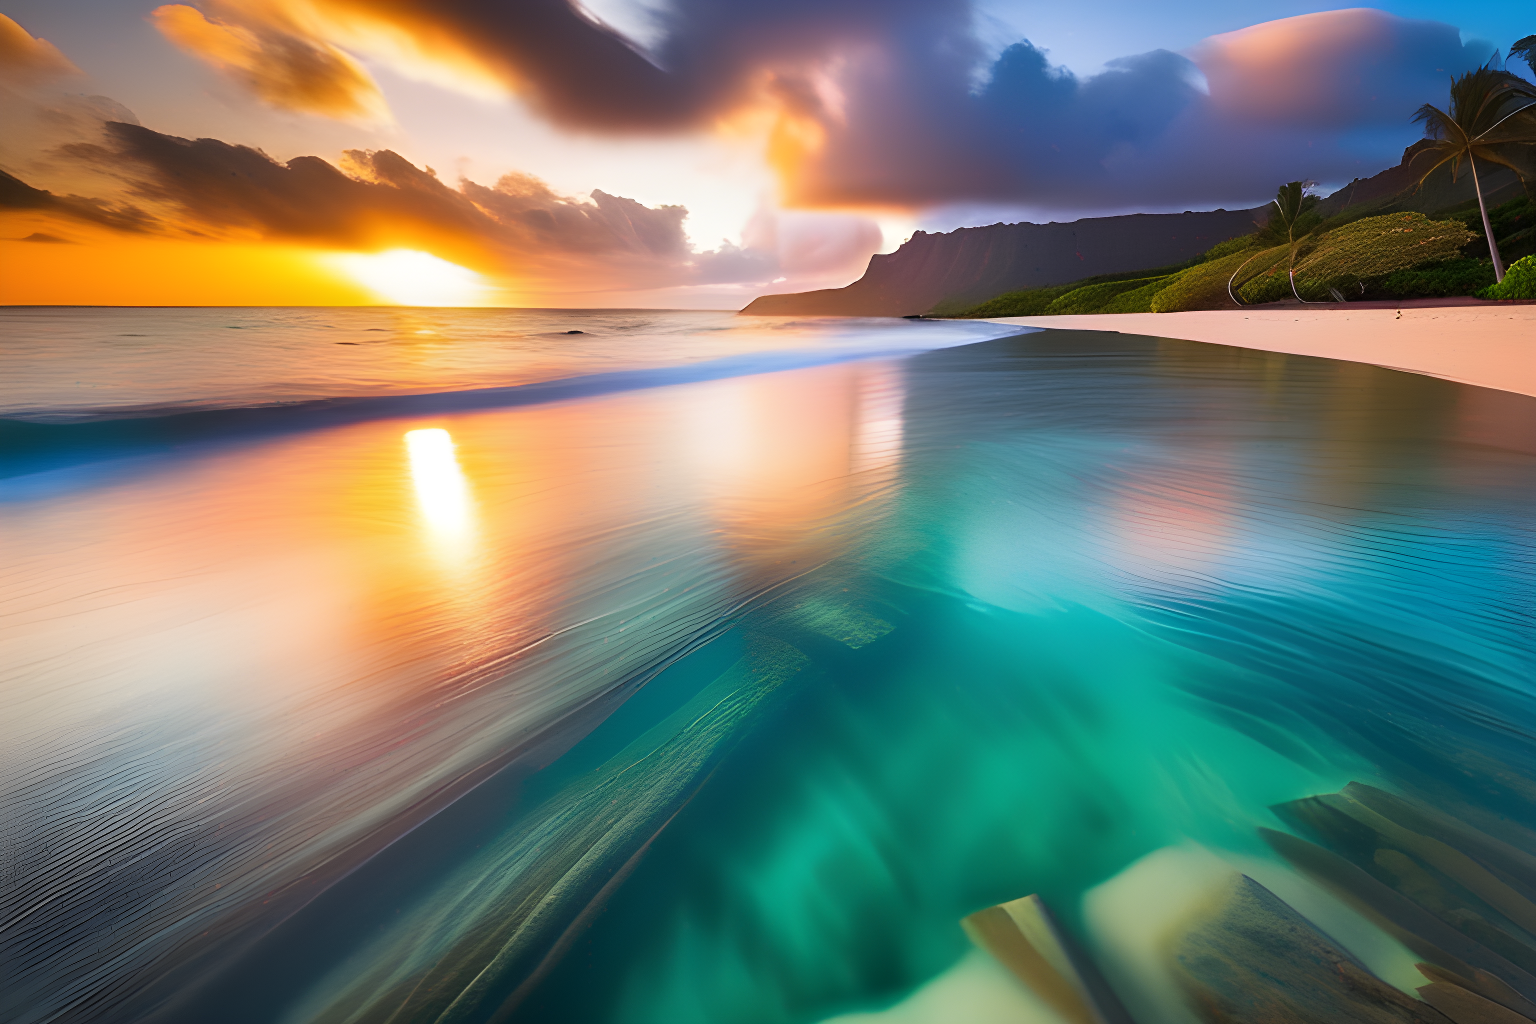 breathtaking photograph of a beach in hawaii